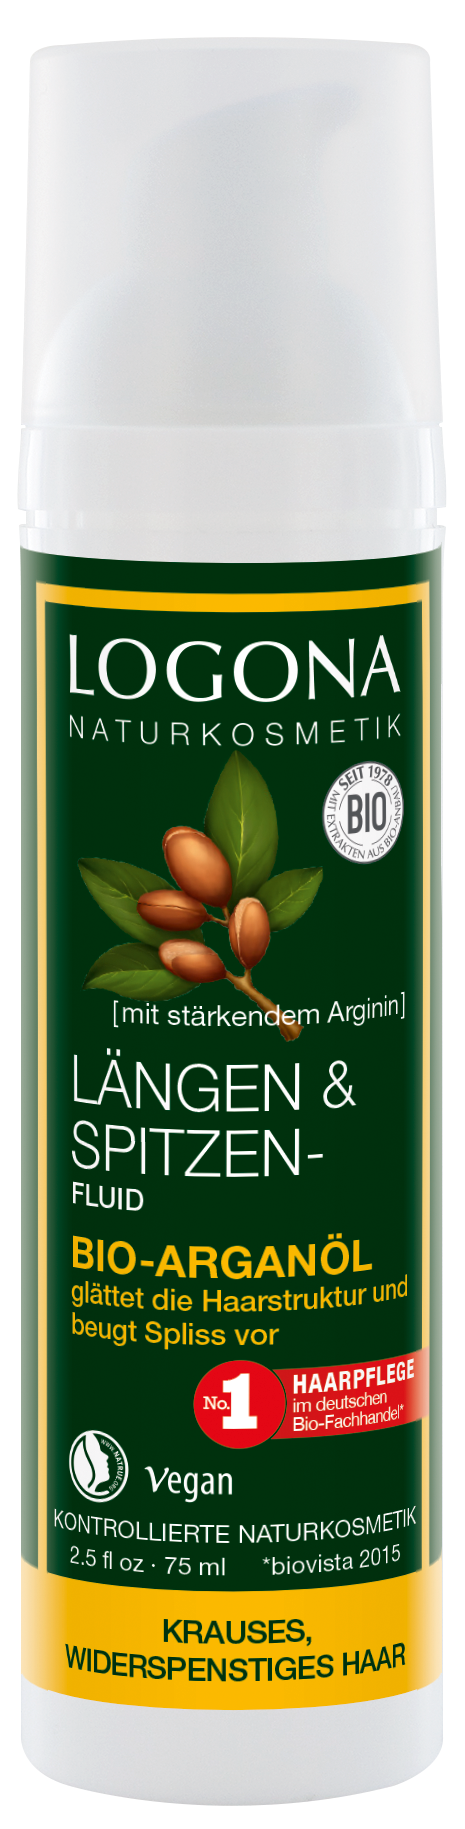 Längen- und Spitzenfluid Bio-Arganöl | Naturkosmetik LOGONA